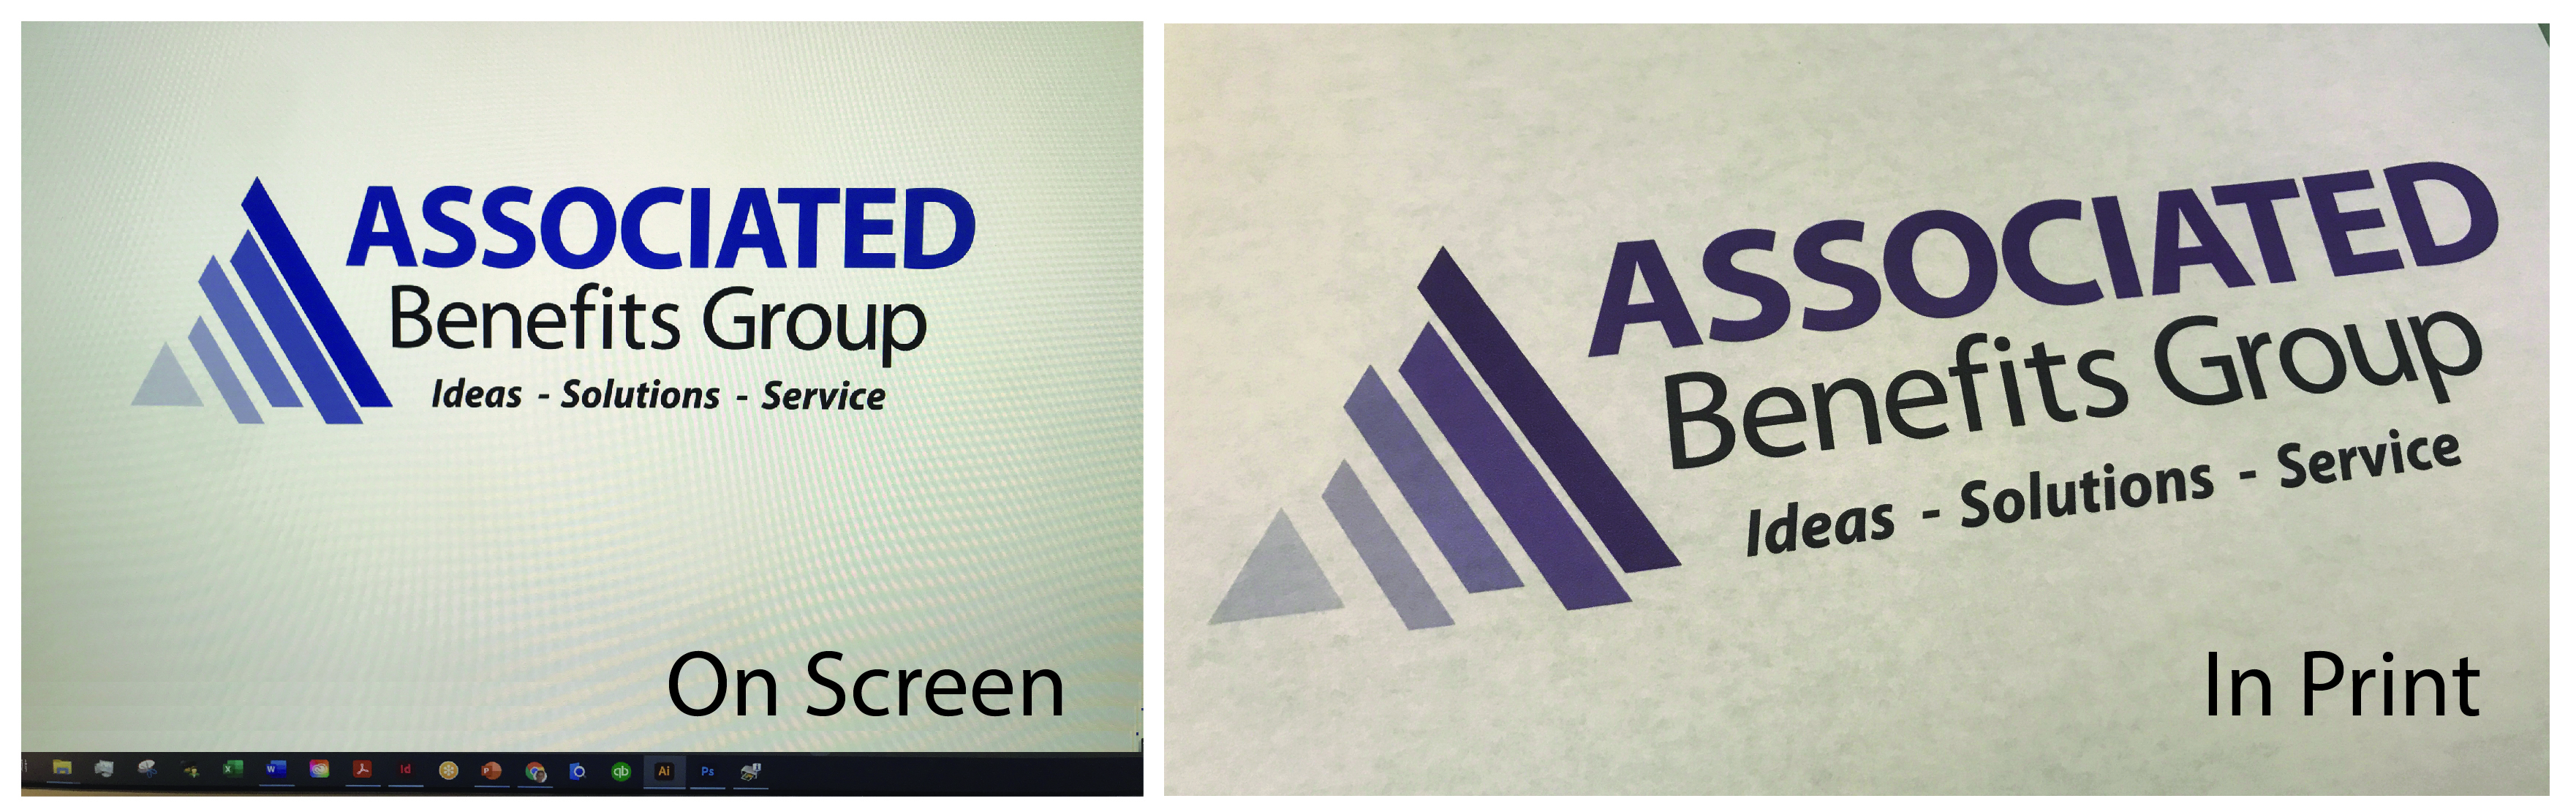 on screen vs printed colors- branding colors